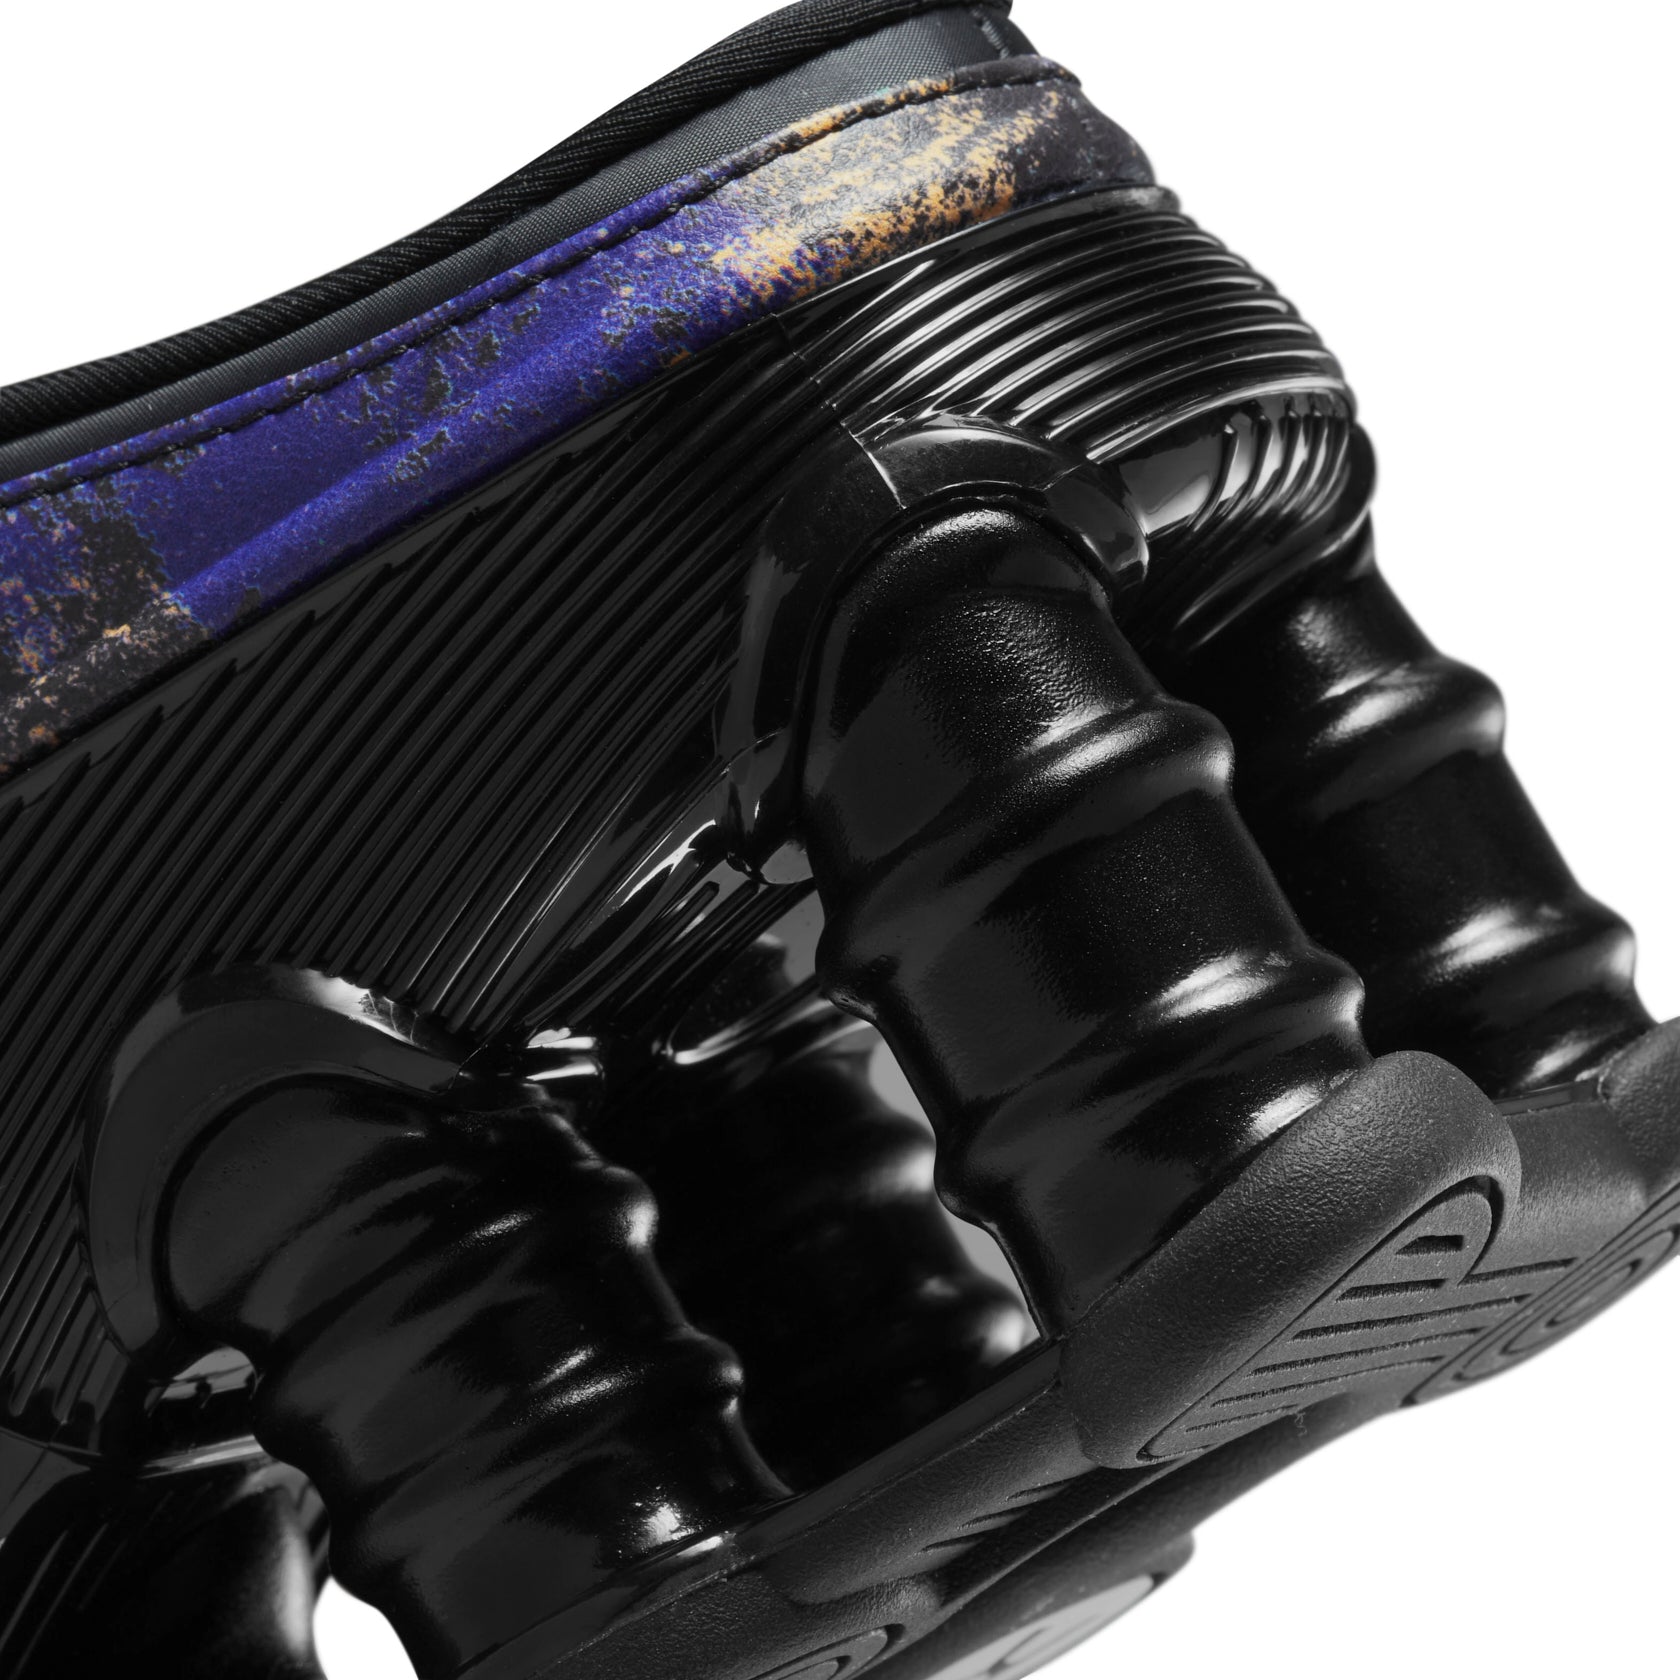 Nike Shox MR4 in Black | Official Online Shop